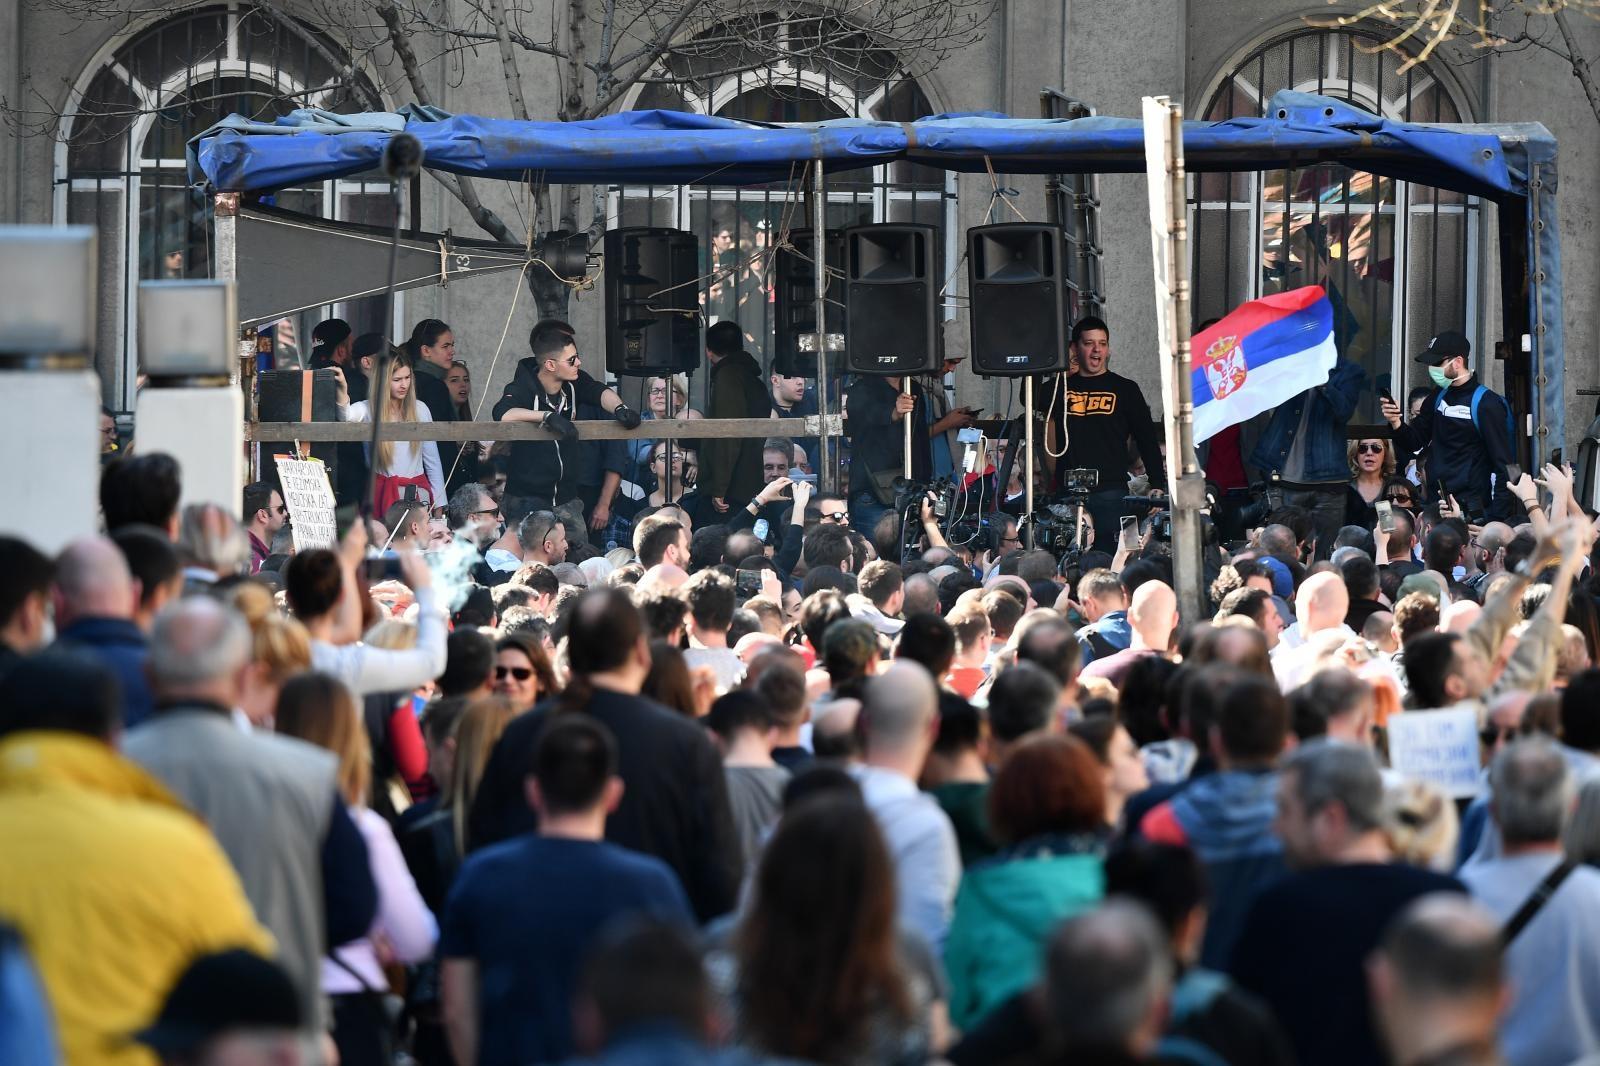 Demonstranti pred zgradom Predsjedništva u Beogradu - Avaz